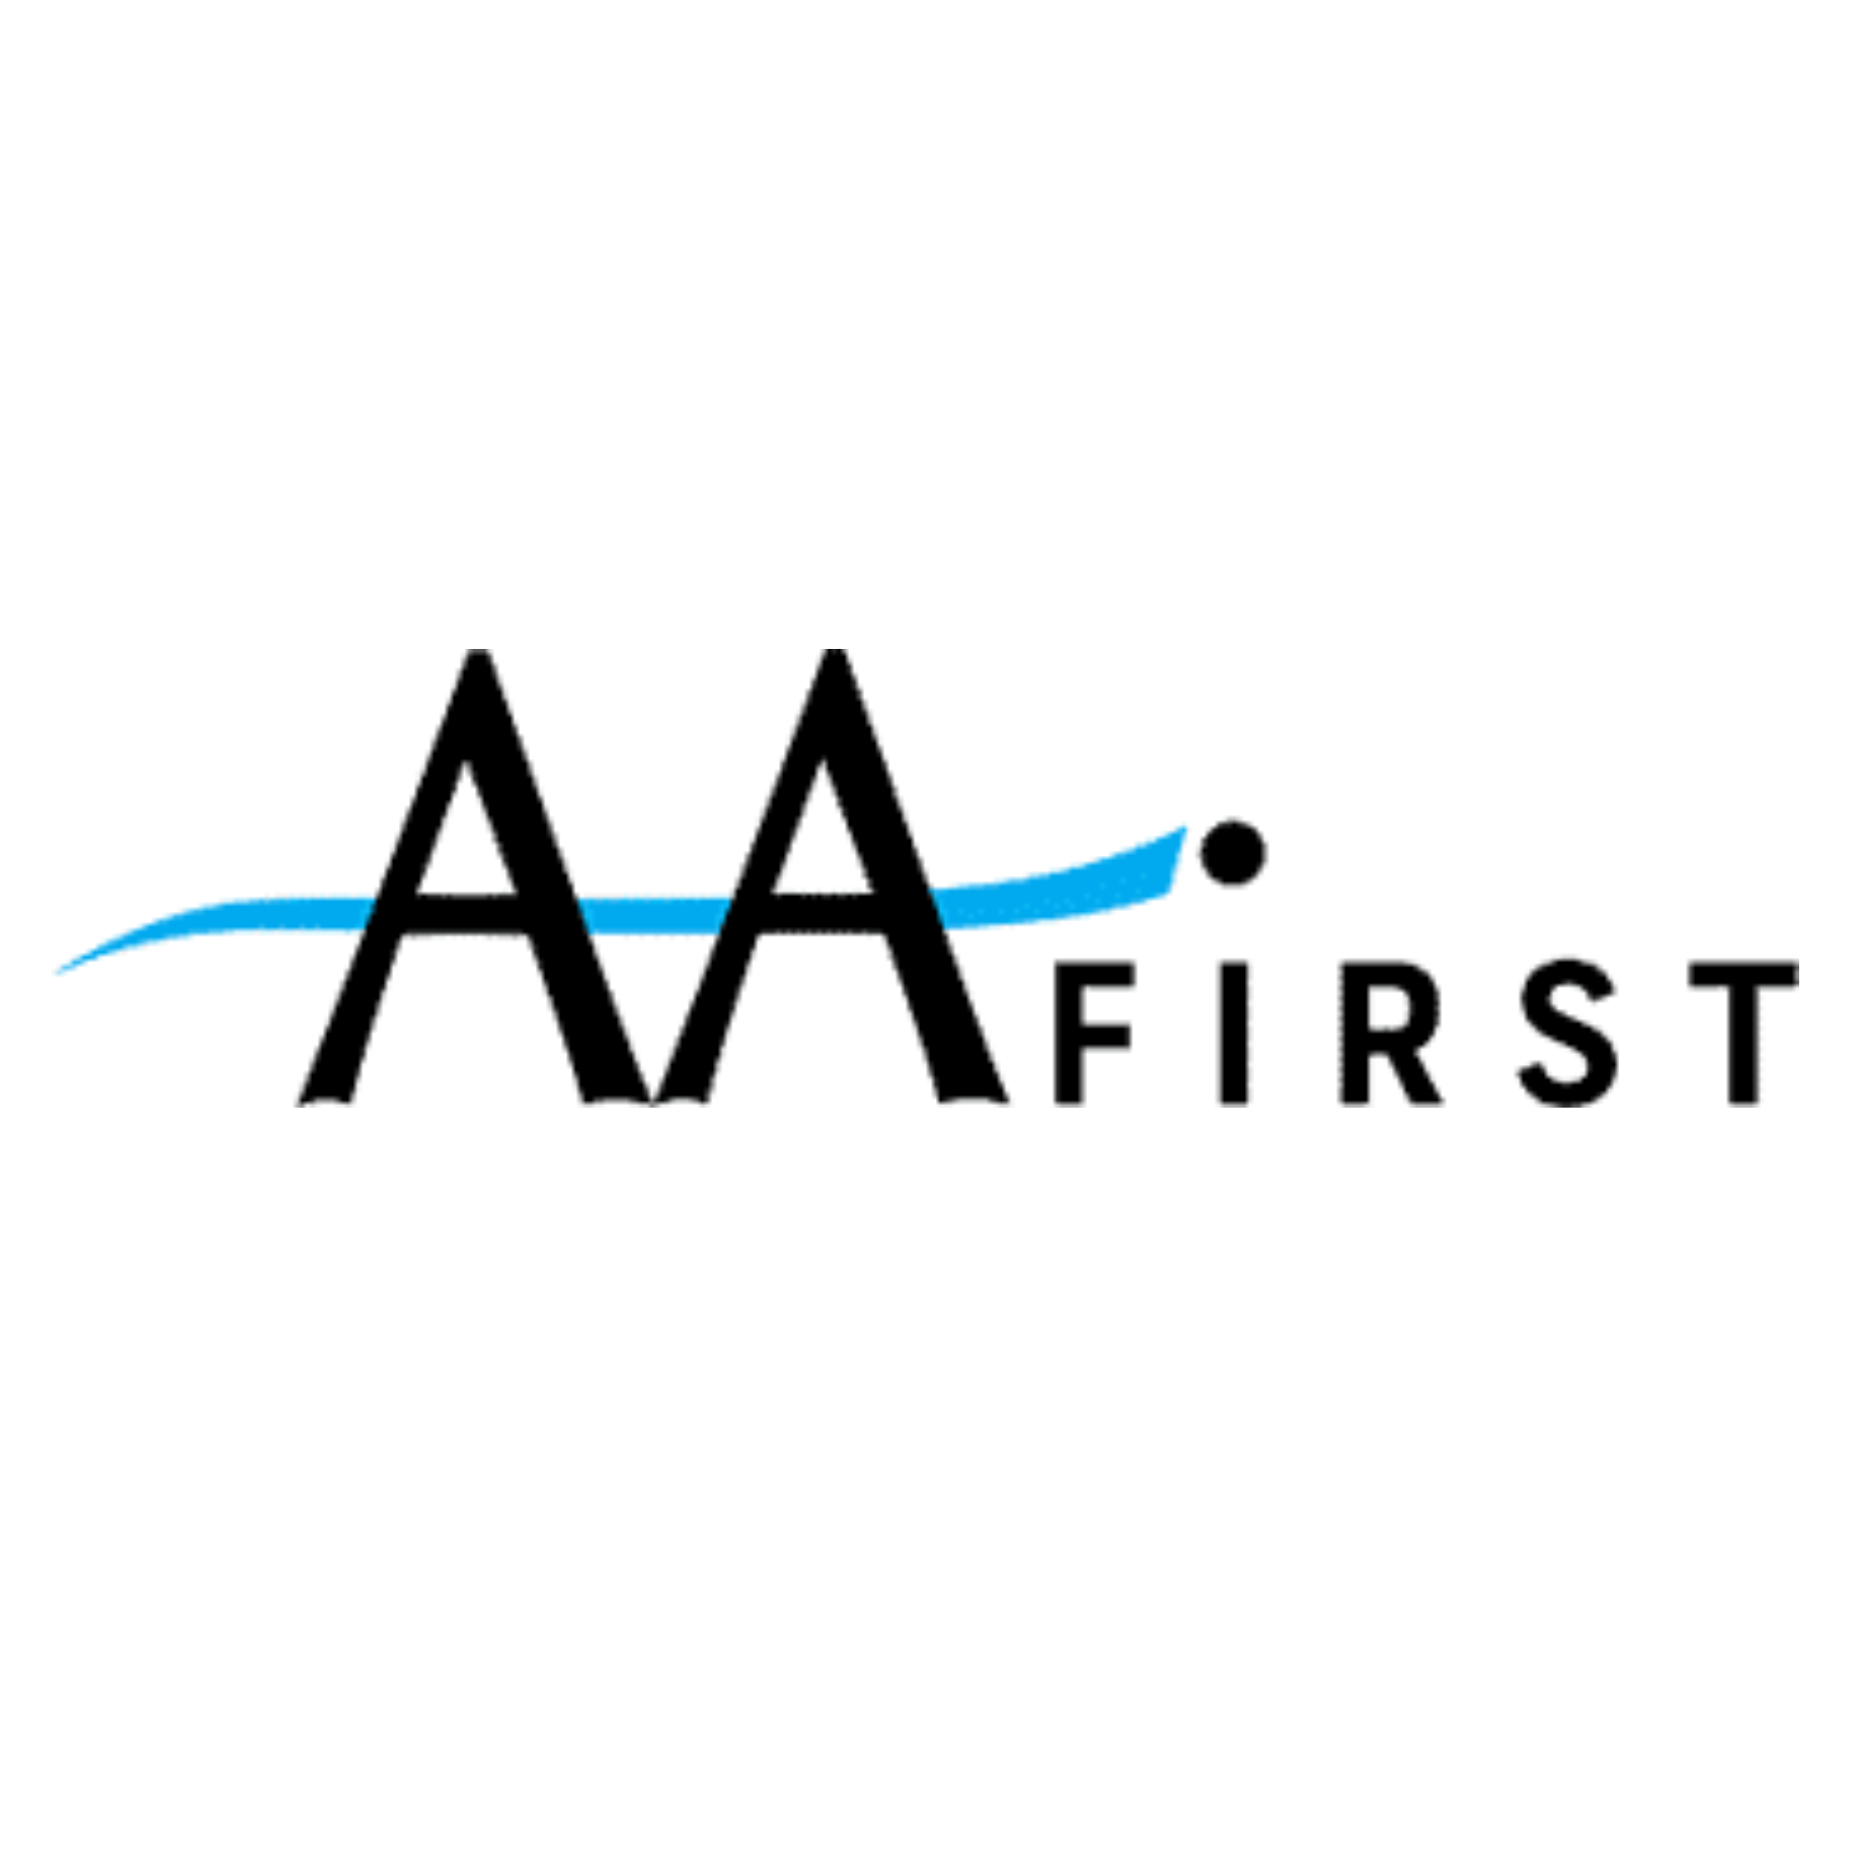 AA First Brand Logo